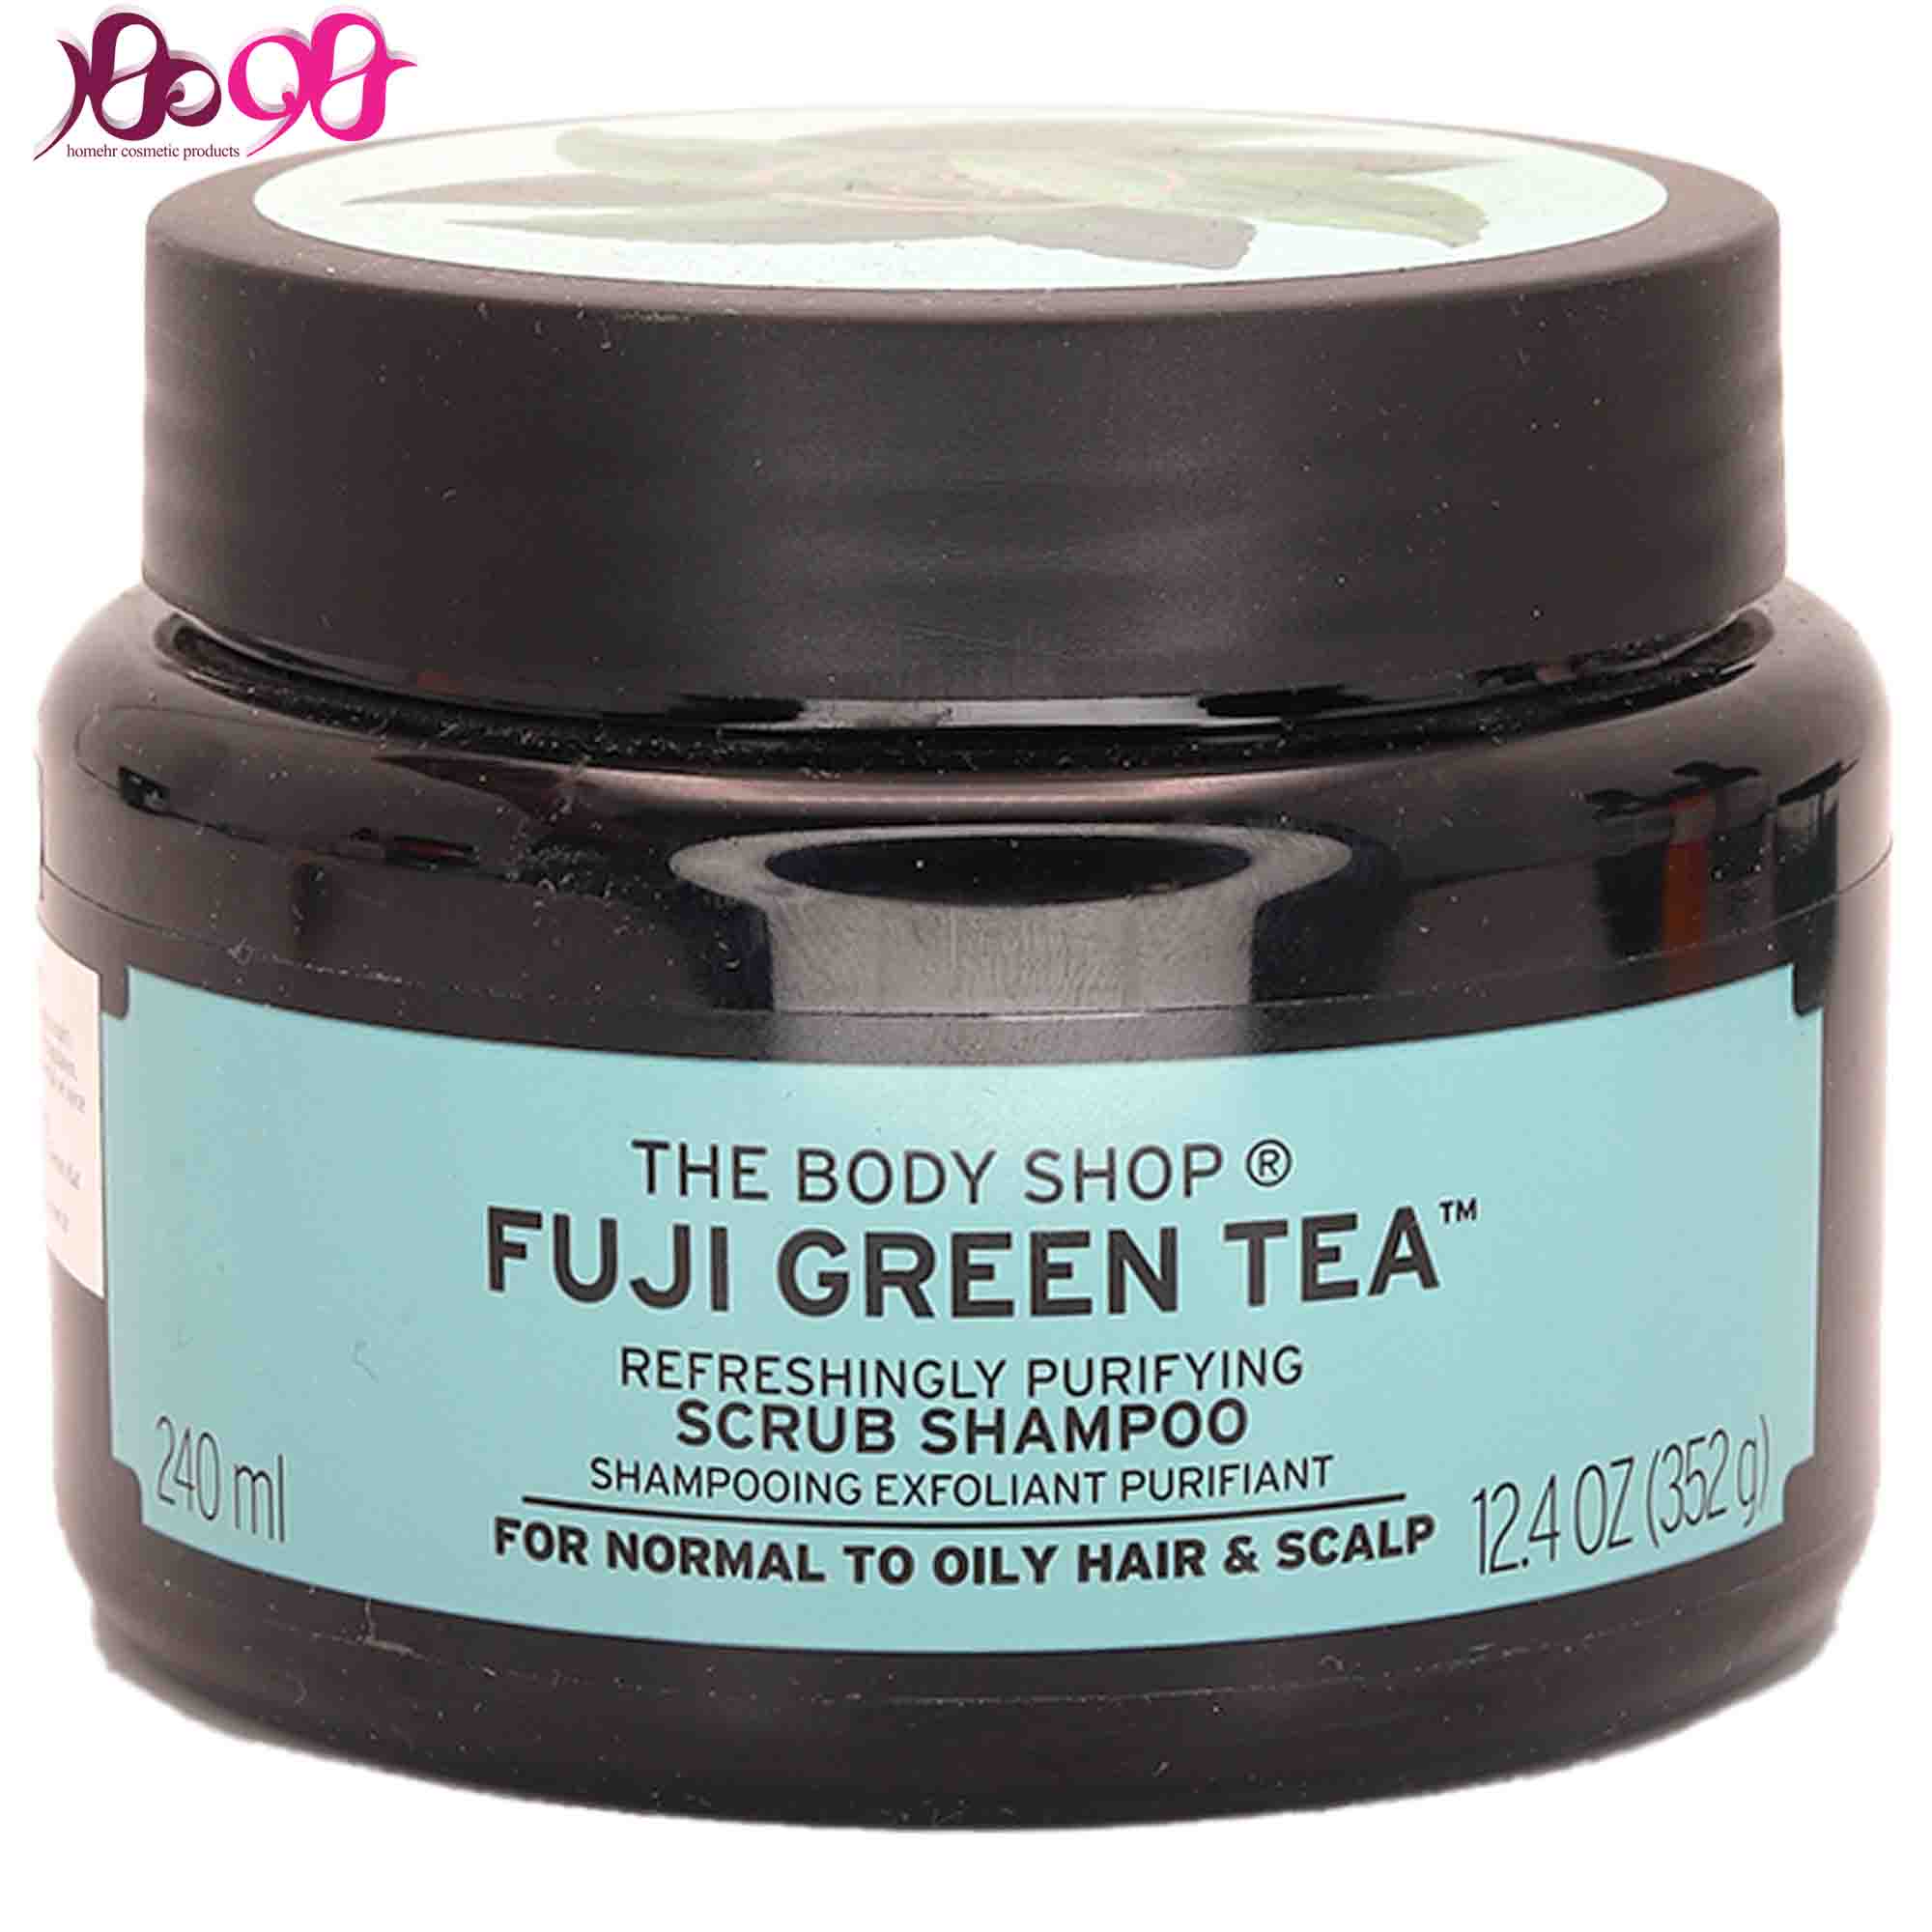 اسکراب-سر-عصاره-چای-fuji-green-tea-سبز-بادی-شاپ-240-میل-BODY-SHOP